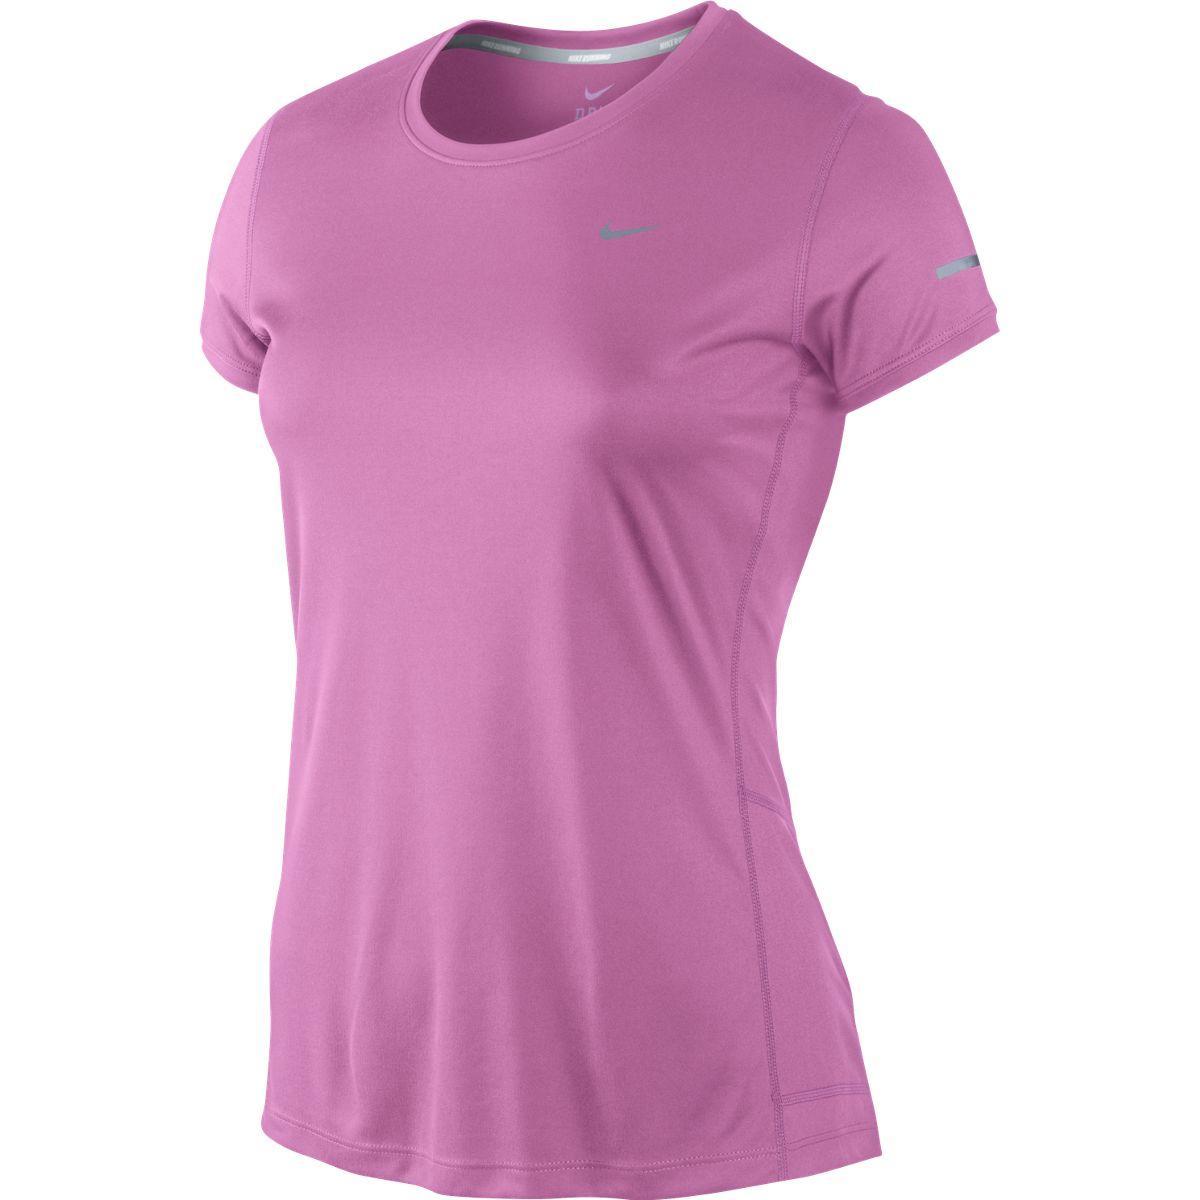 Nike Womens Miler SS Crew - Pink/Reflective Silver - Tennisnuts.com